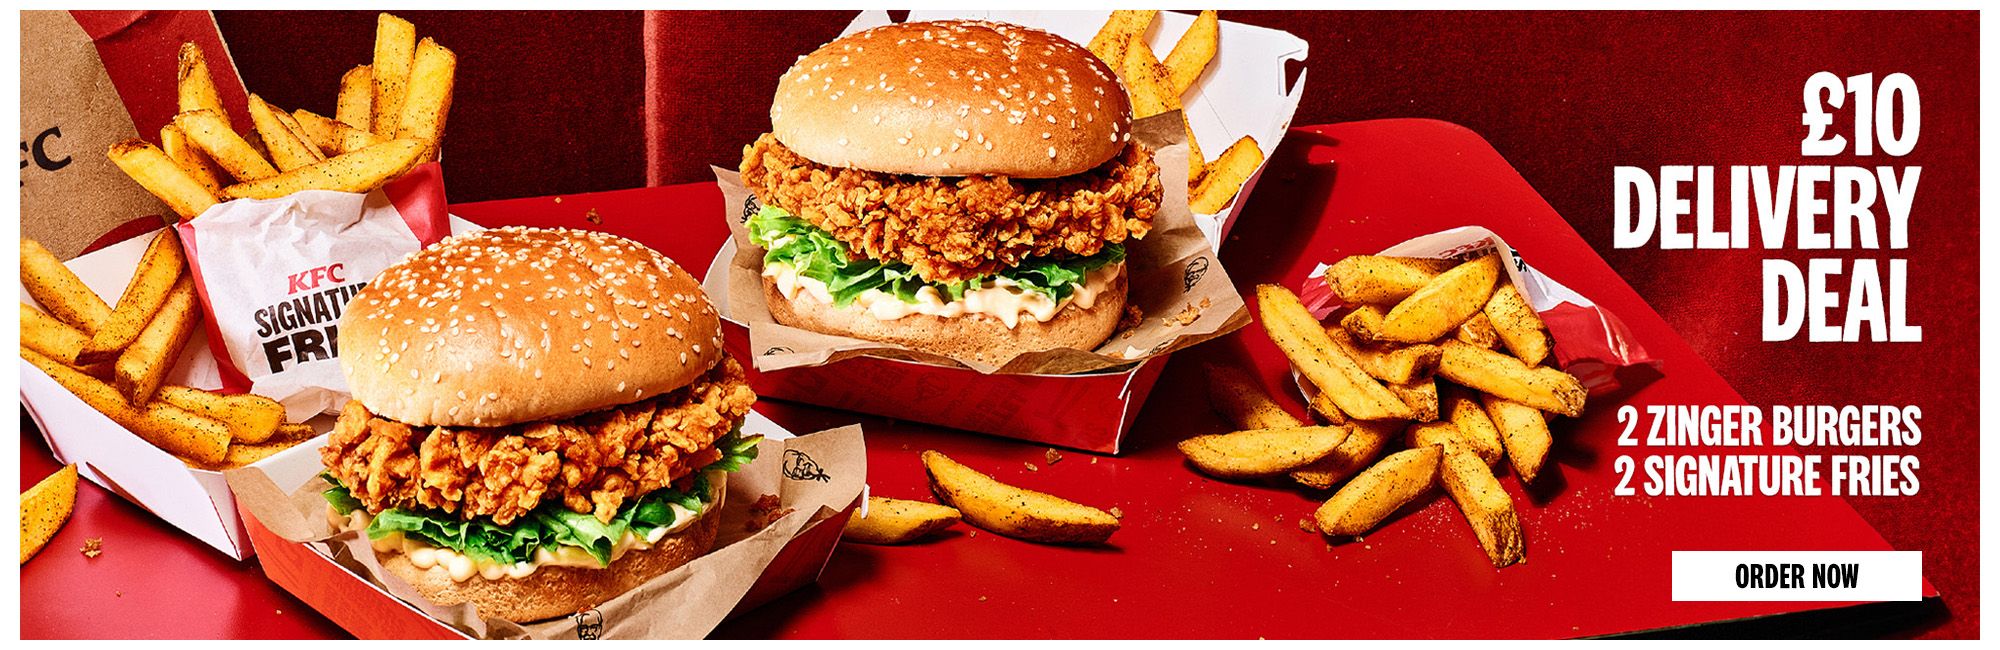 KFC - 2 Zinger Burgers and 2 Fries